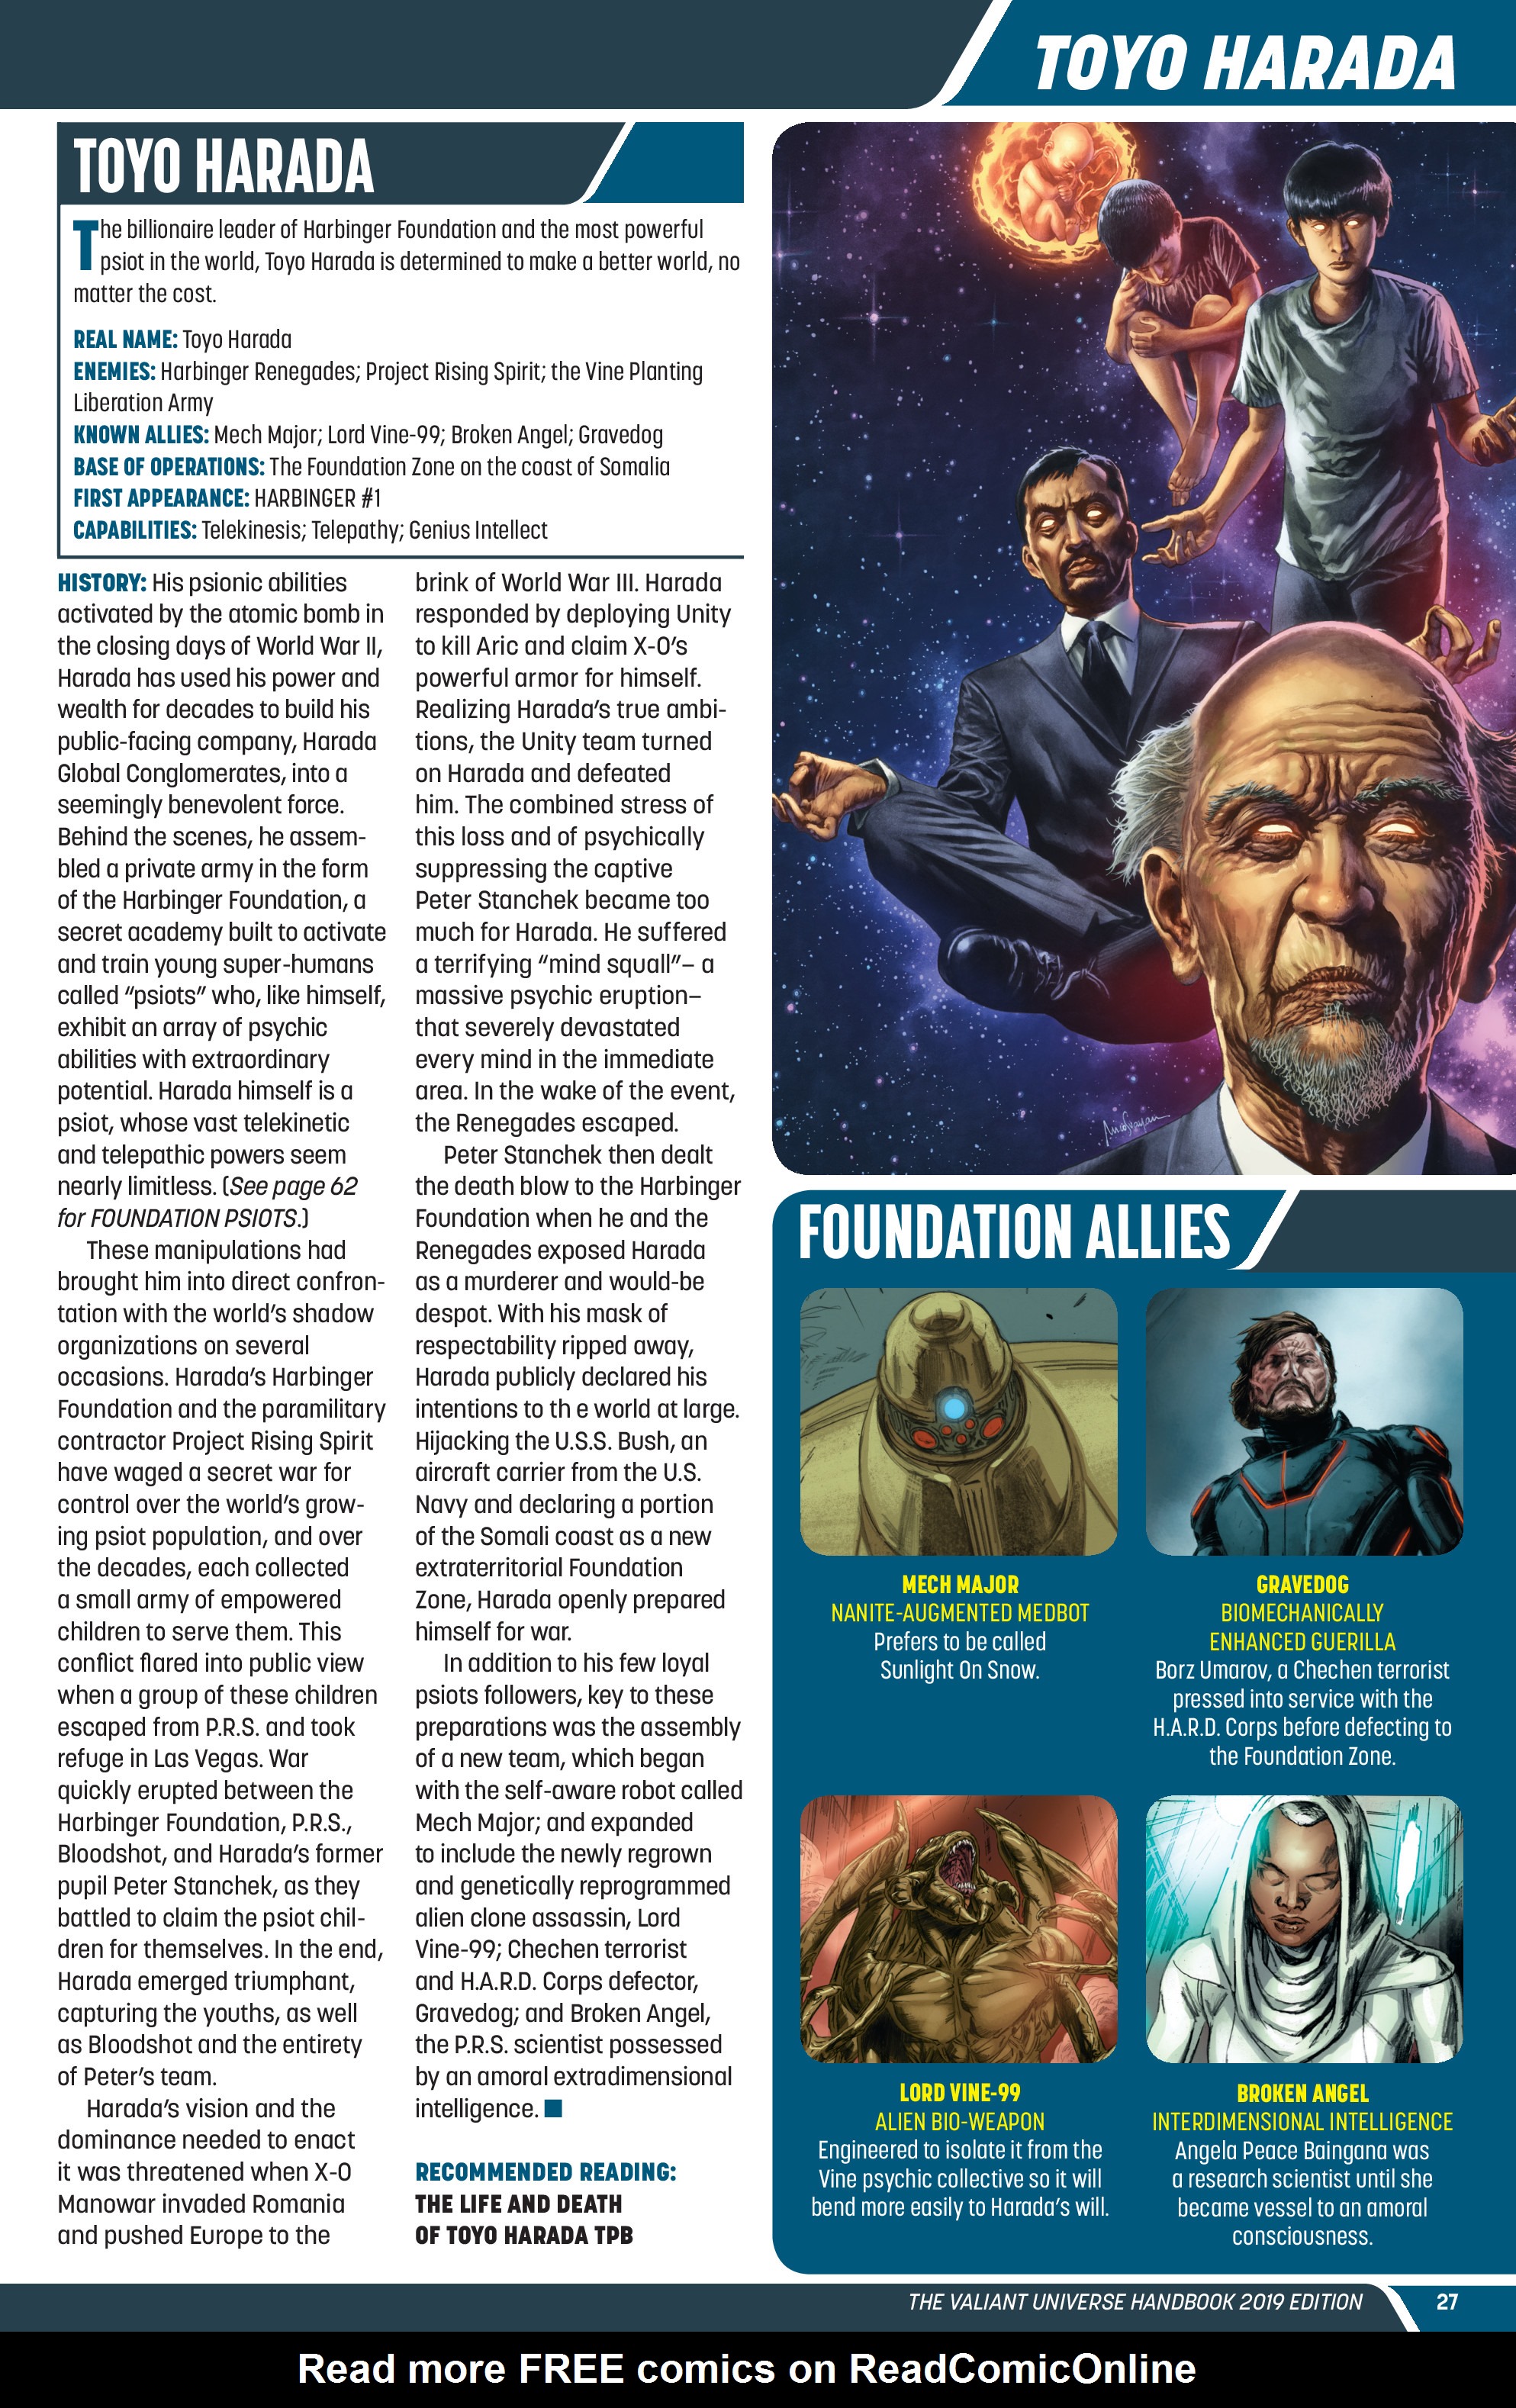 Read online Valiant Universe Handbook 2019 Edition comic -  Issue # Full - 29